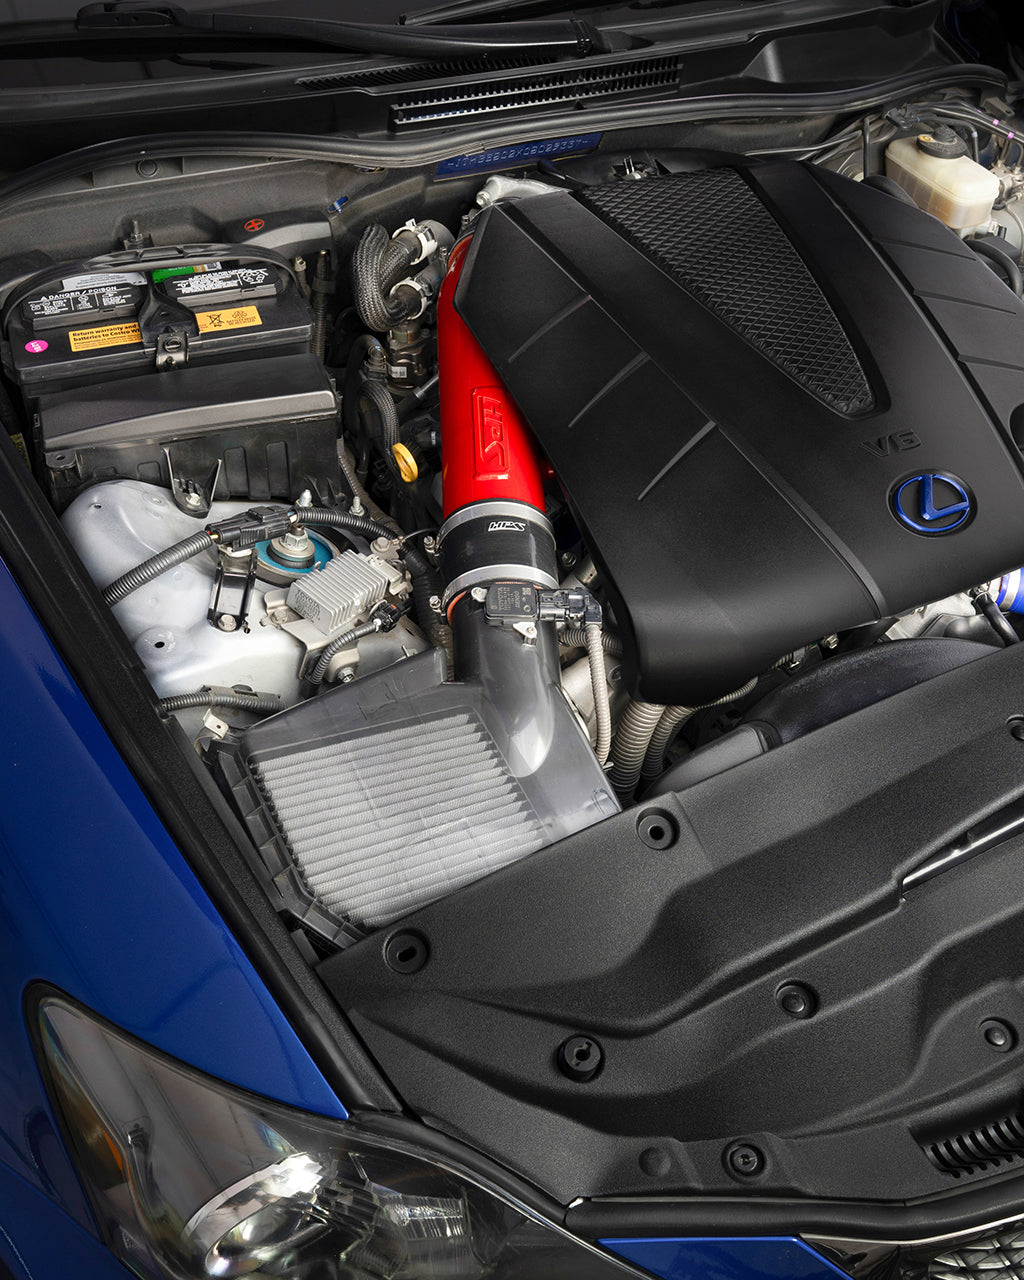 HPS Red Cold Air Intake Kit Post MAF Tube + High Flow Filter Installed 2010-2015 Lexus IS250C 2.5L V6 827-710R